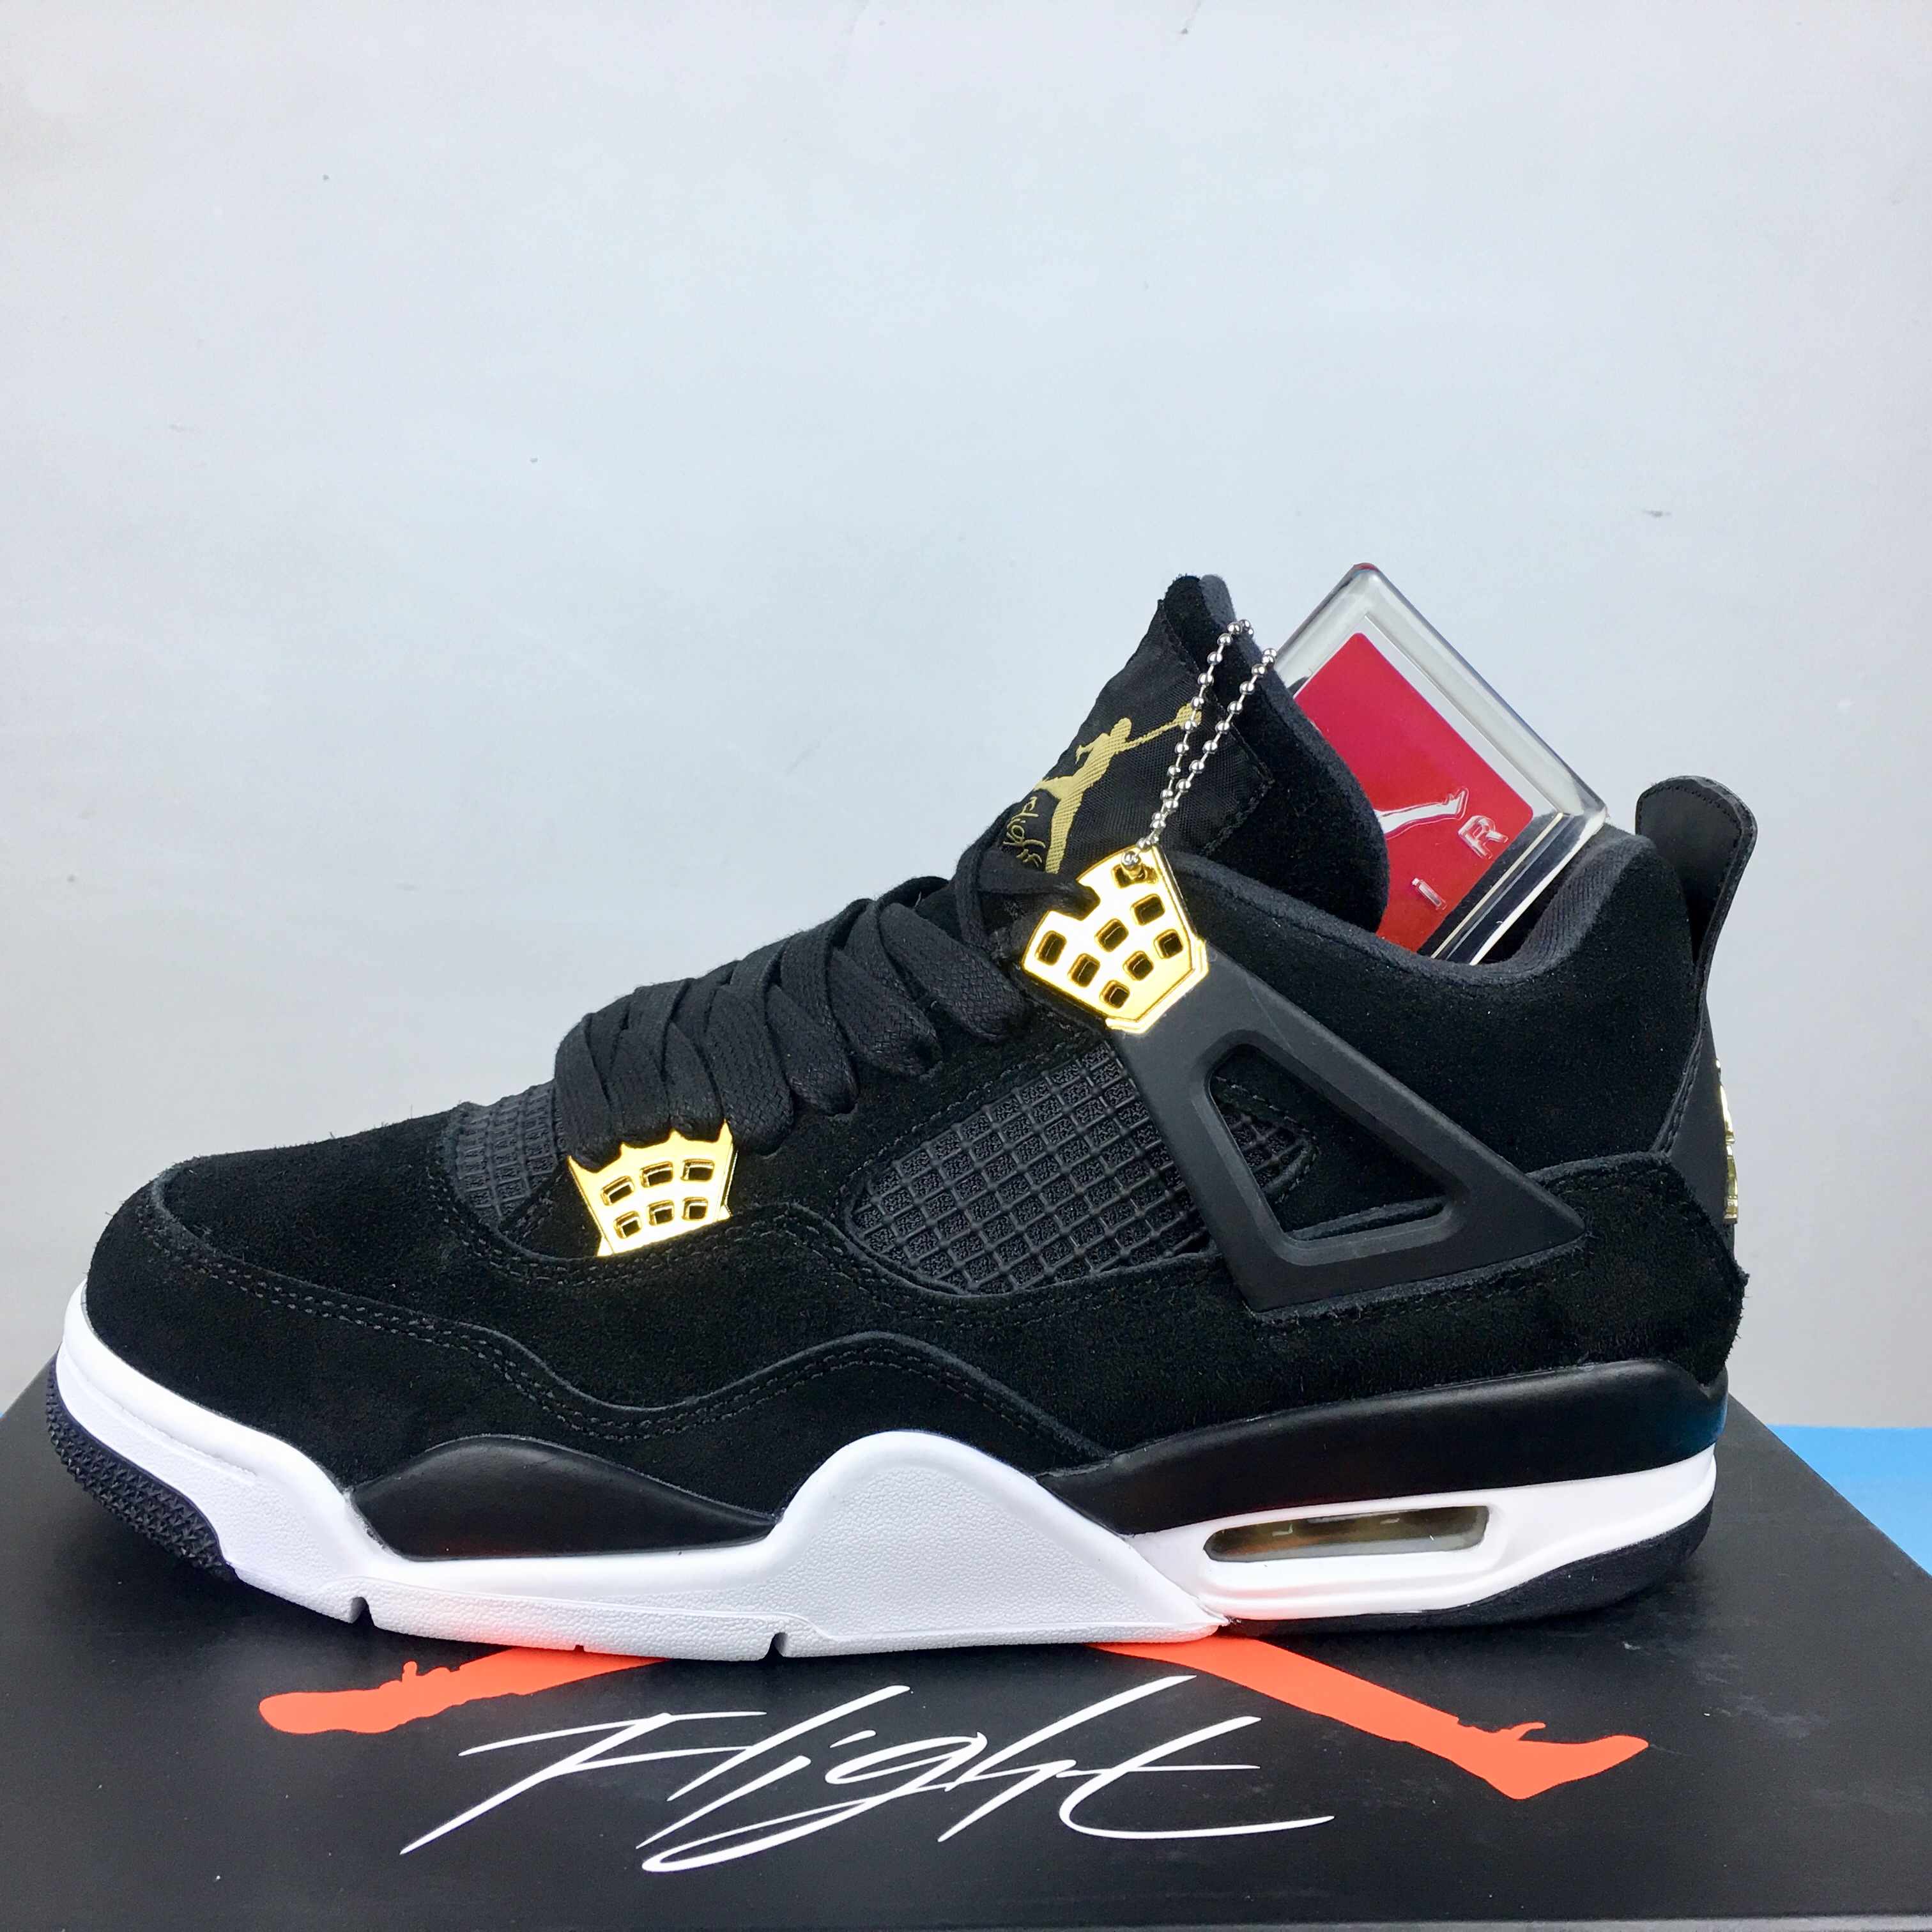 Air Jordan 4 Royalty Black Gold Shoes